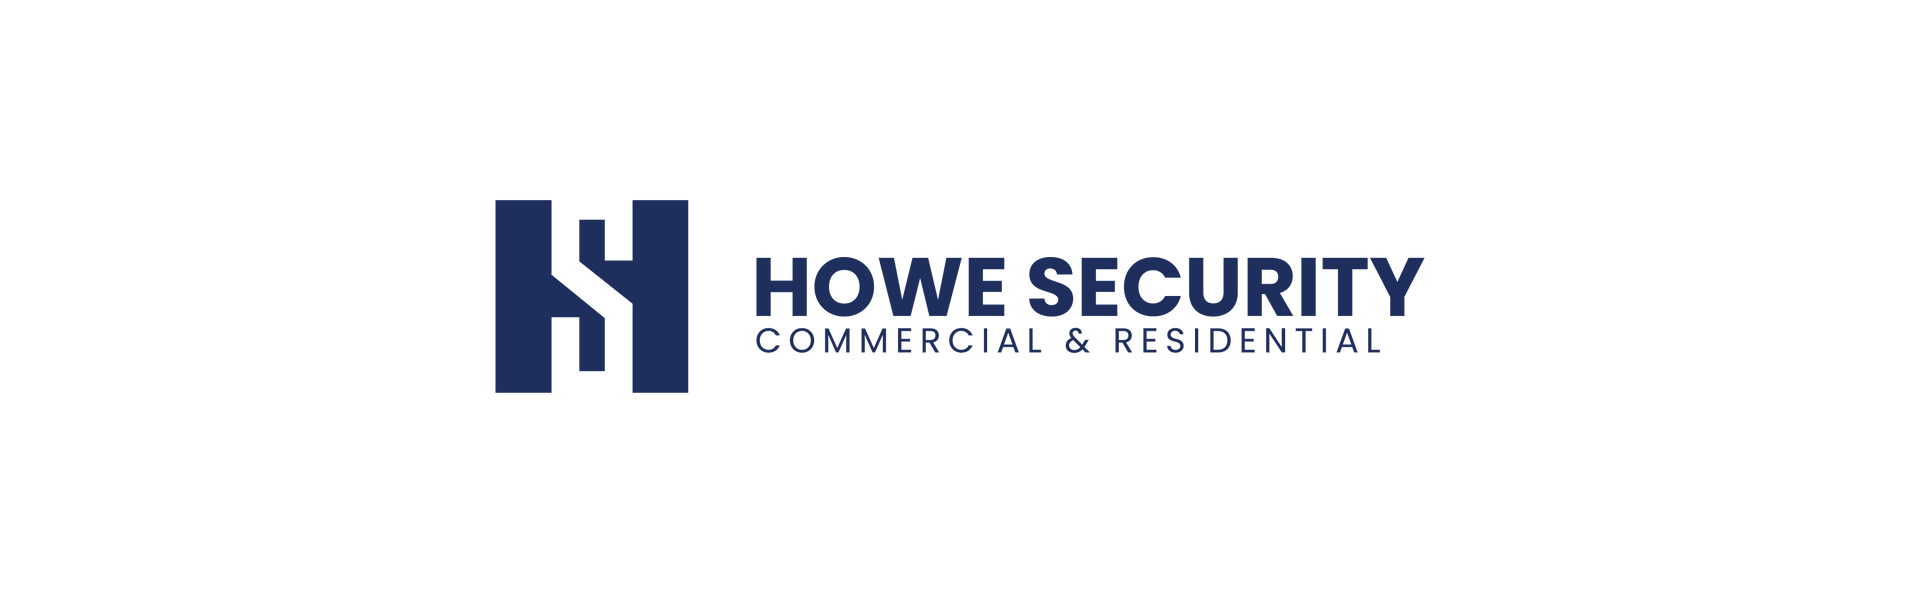 Howe Security Horizontal Logo